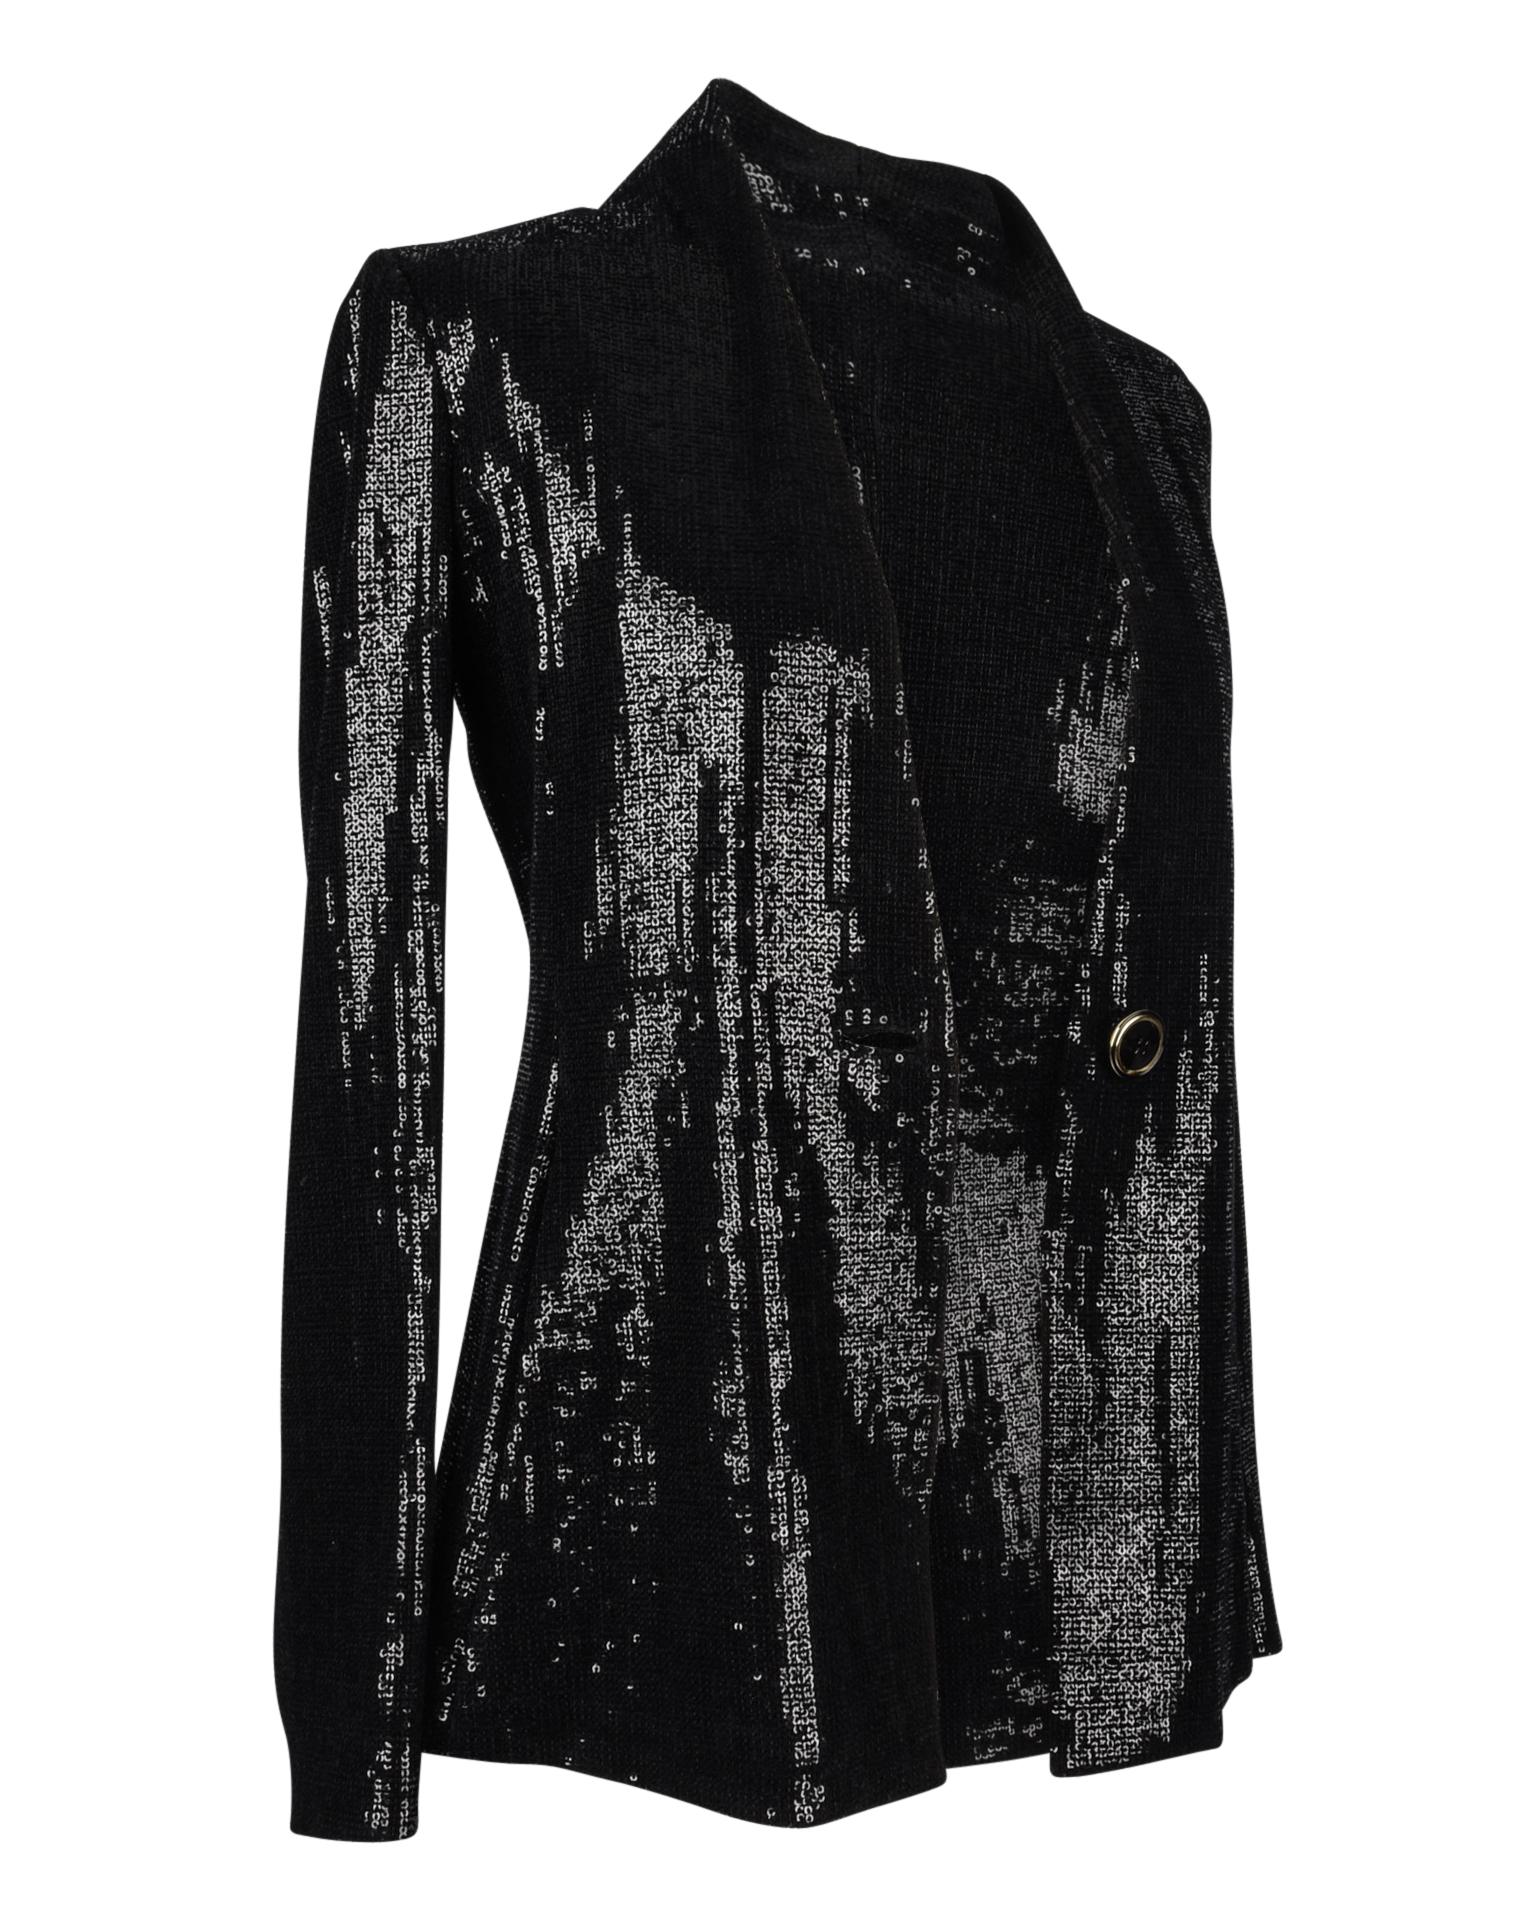 Giorgio Armani Jacket Black Sequined Single Breast 38 / 6 nwt 2